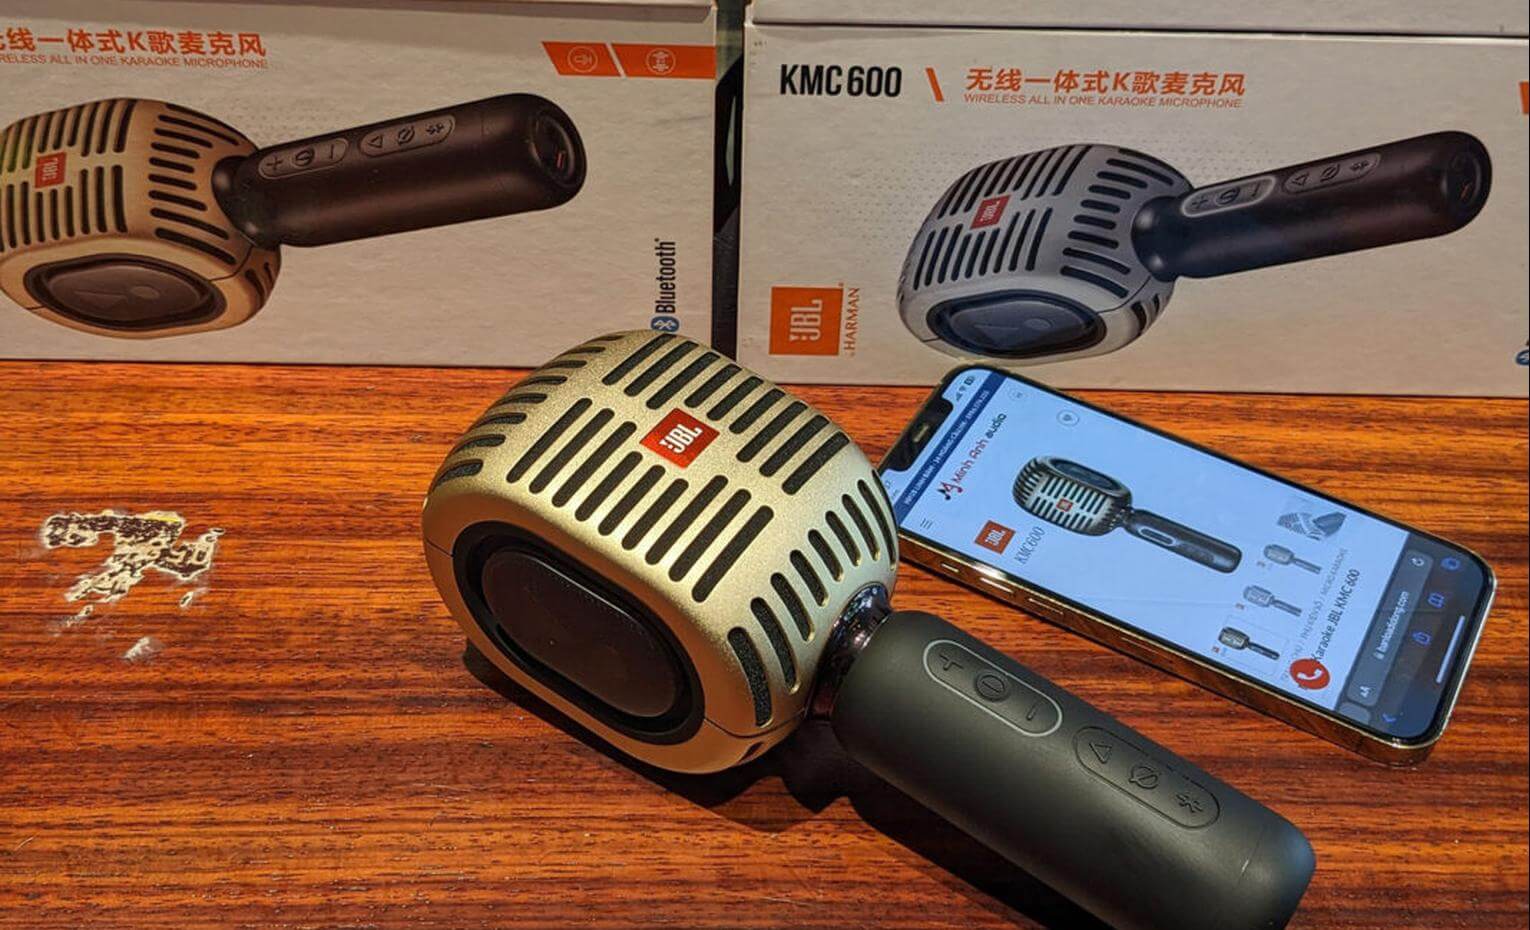 میکروفون JBL KMC600